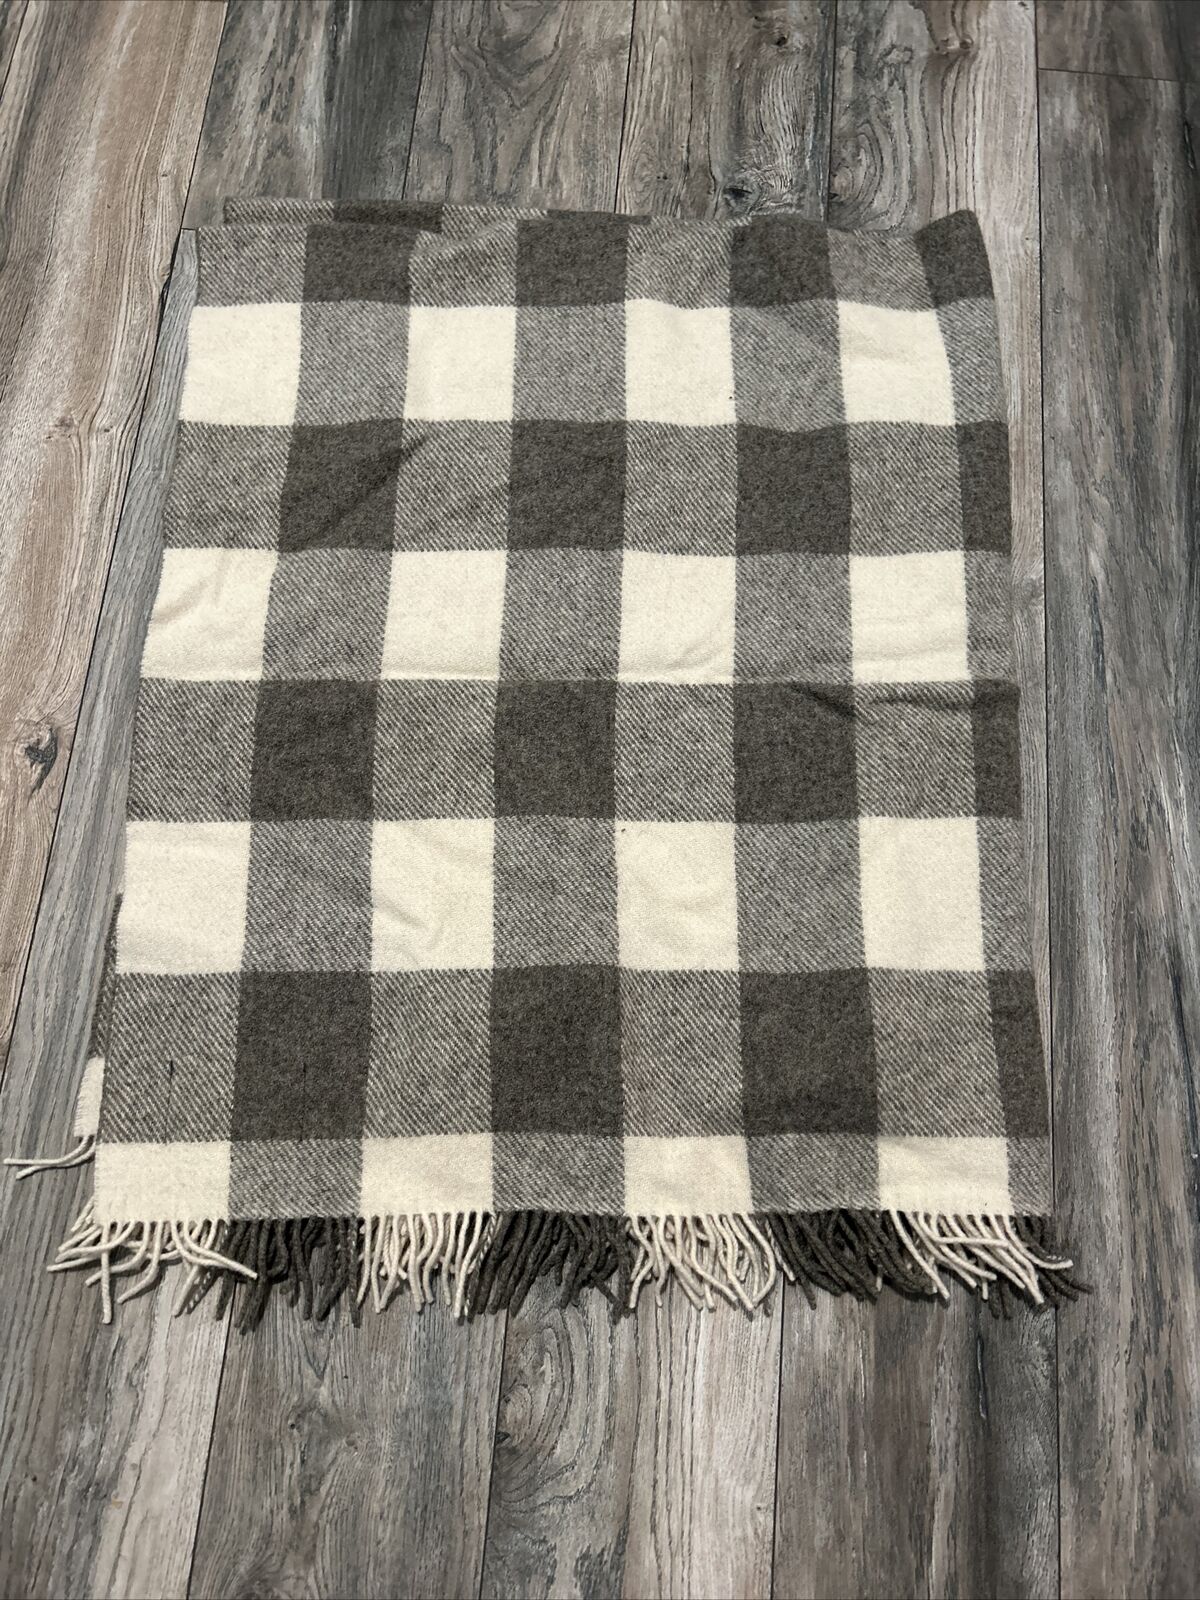 Royal Mile Scotland Wool Throw Blanket Tassle Trim Nice 62 x 52 